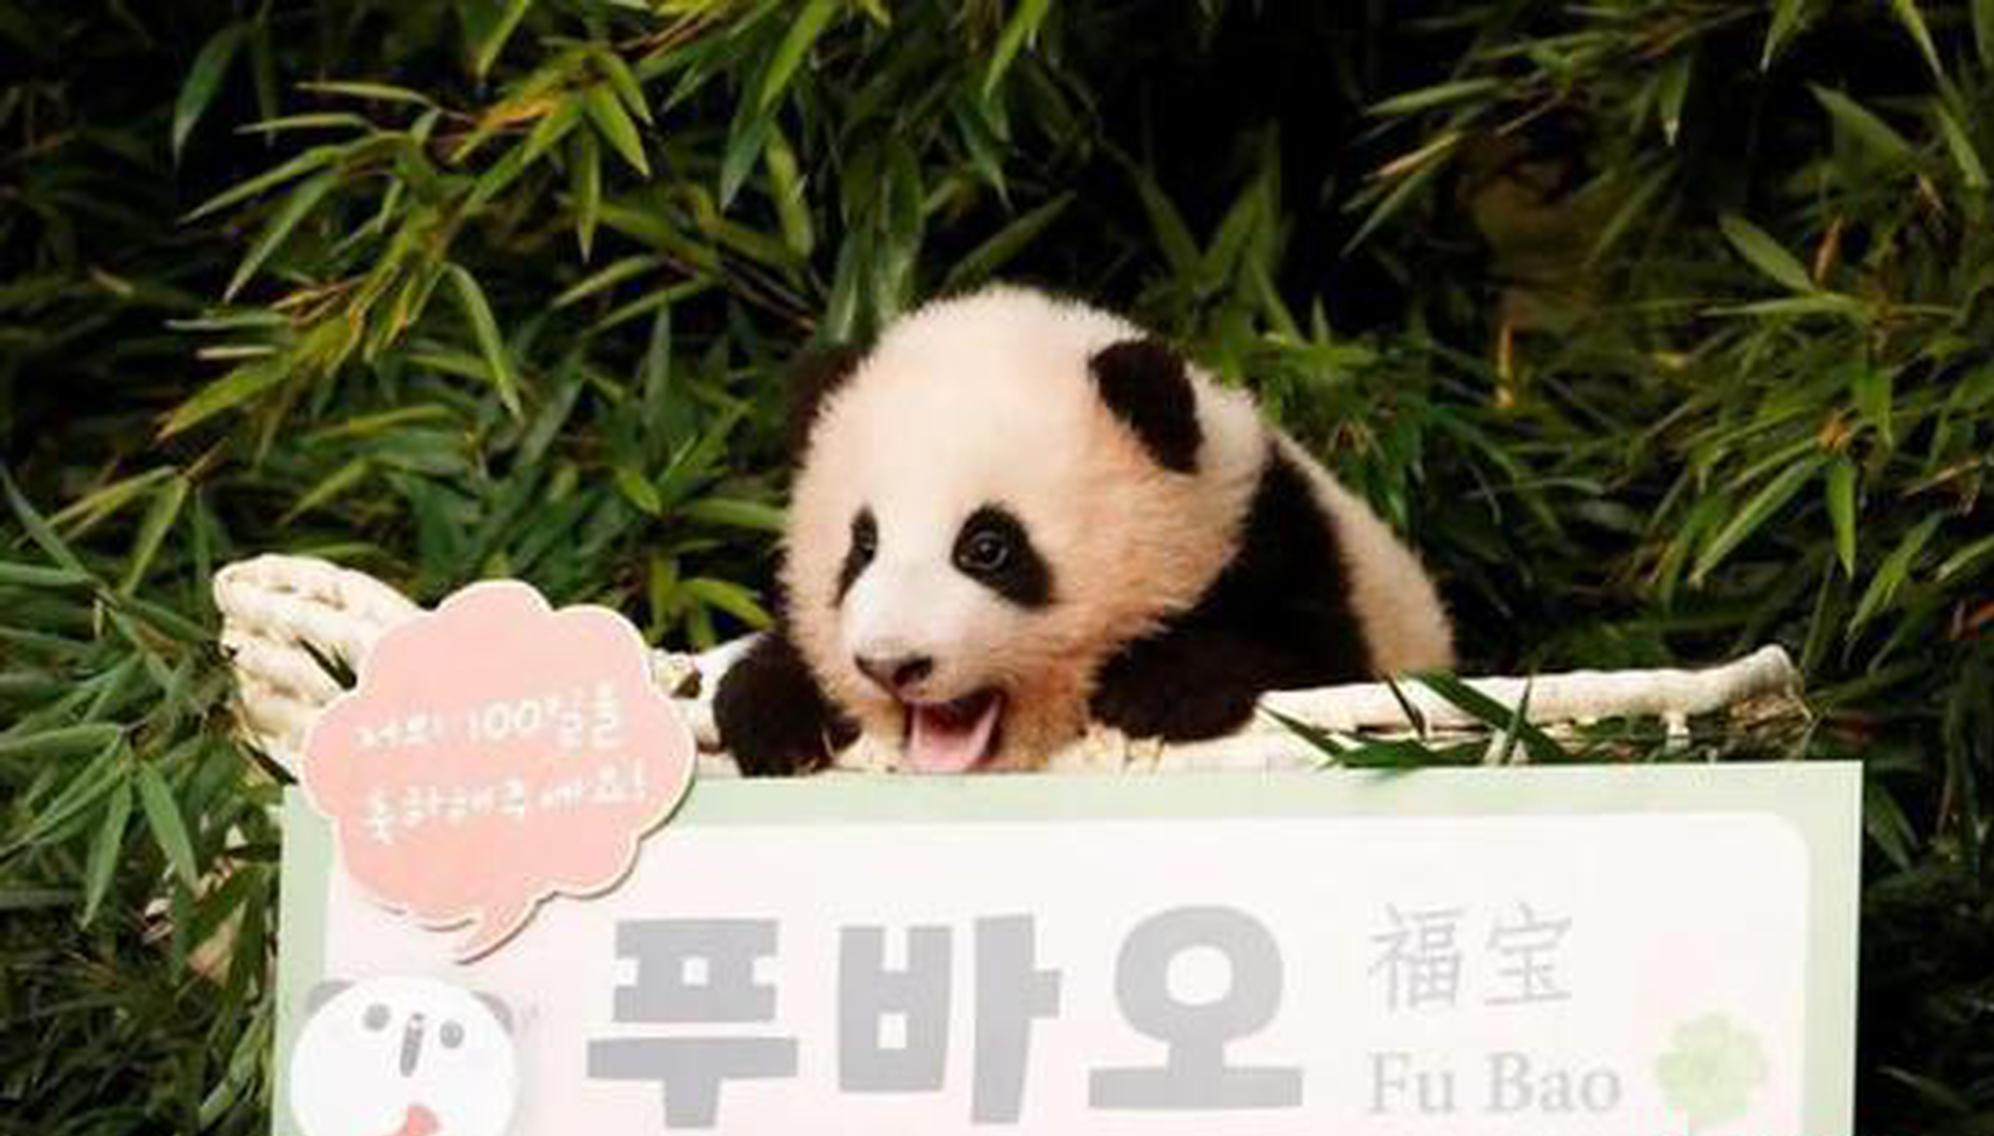 Giant panda Fu Bao celebrates her 3rd birthday in South Korea